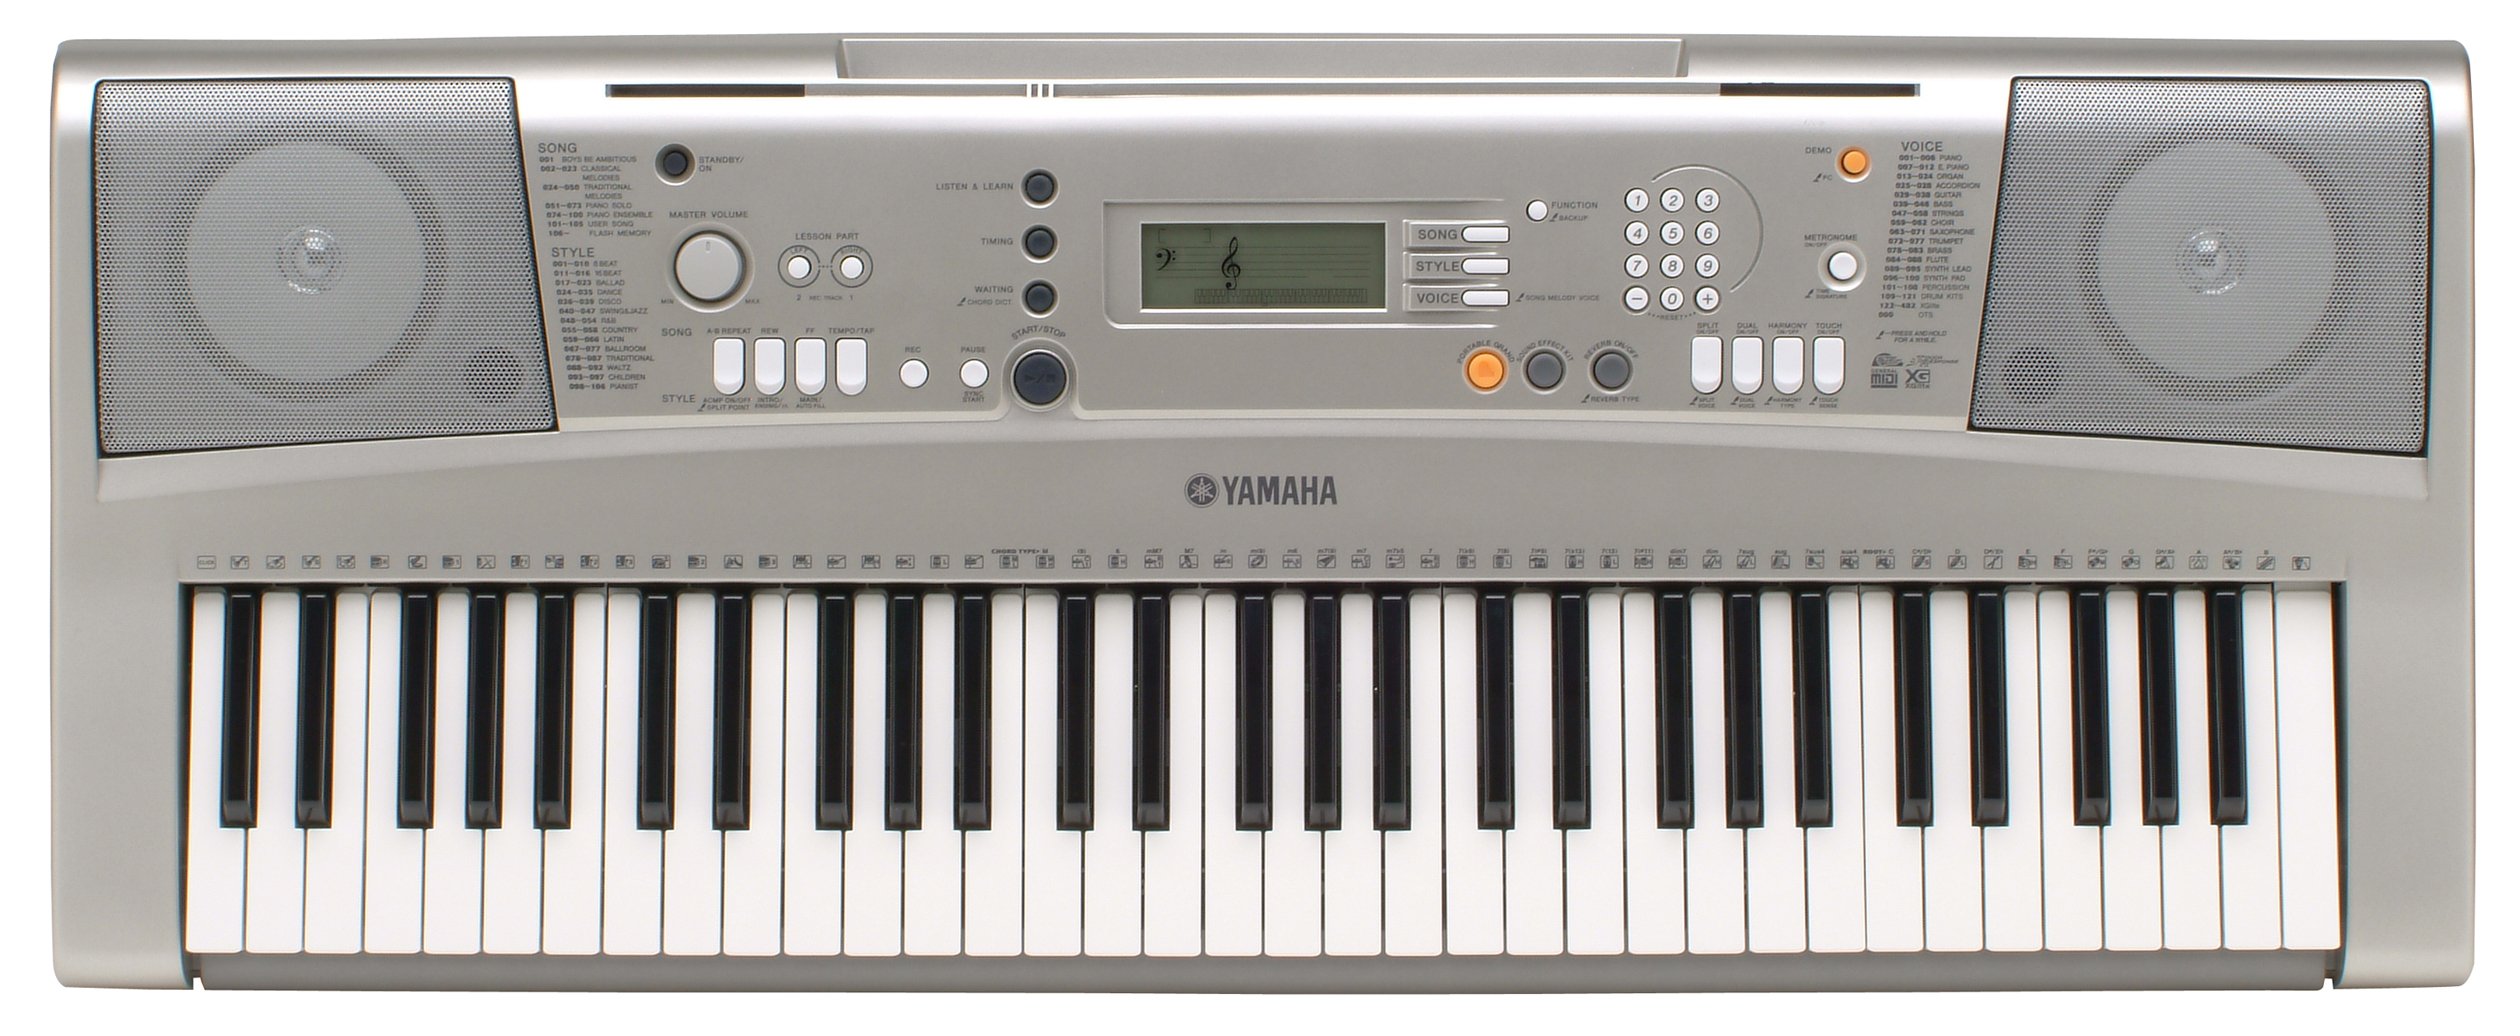 Yamaha PSRE303 61 Key MIDI Keyboard with Sequencer